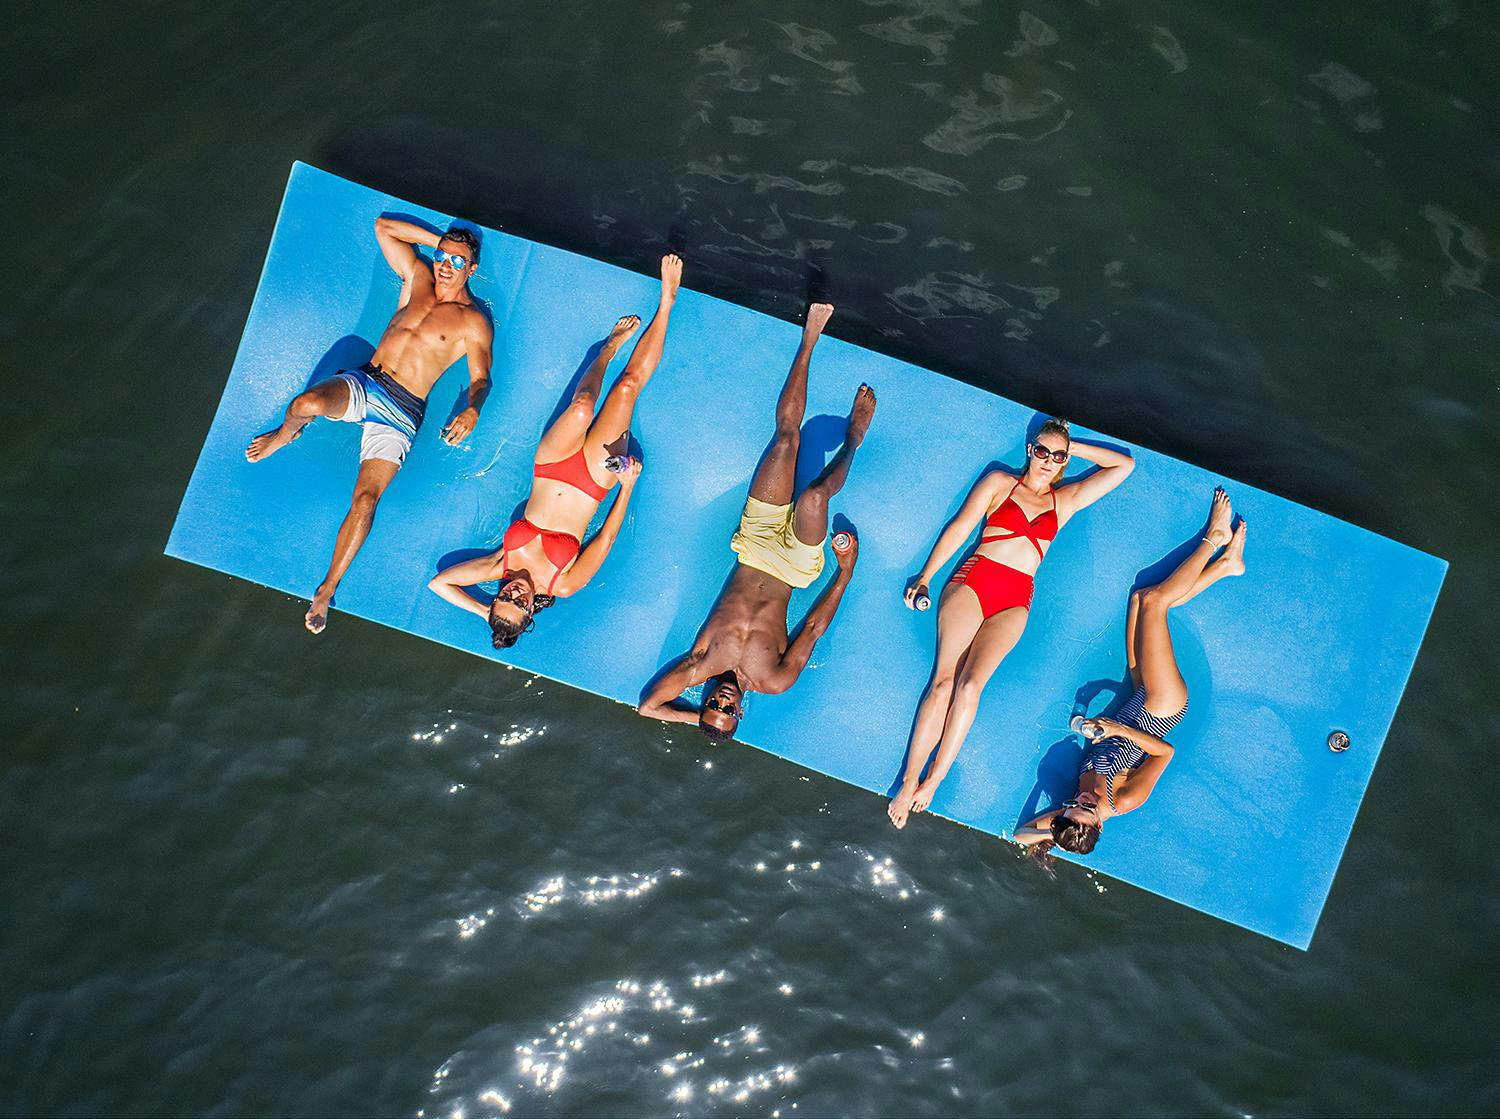 floating water mat sam's club